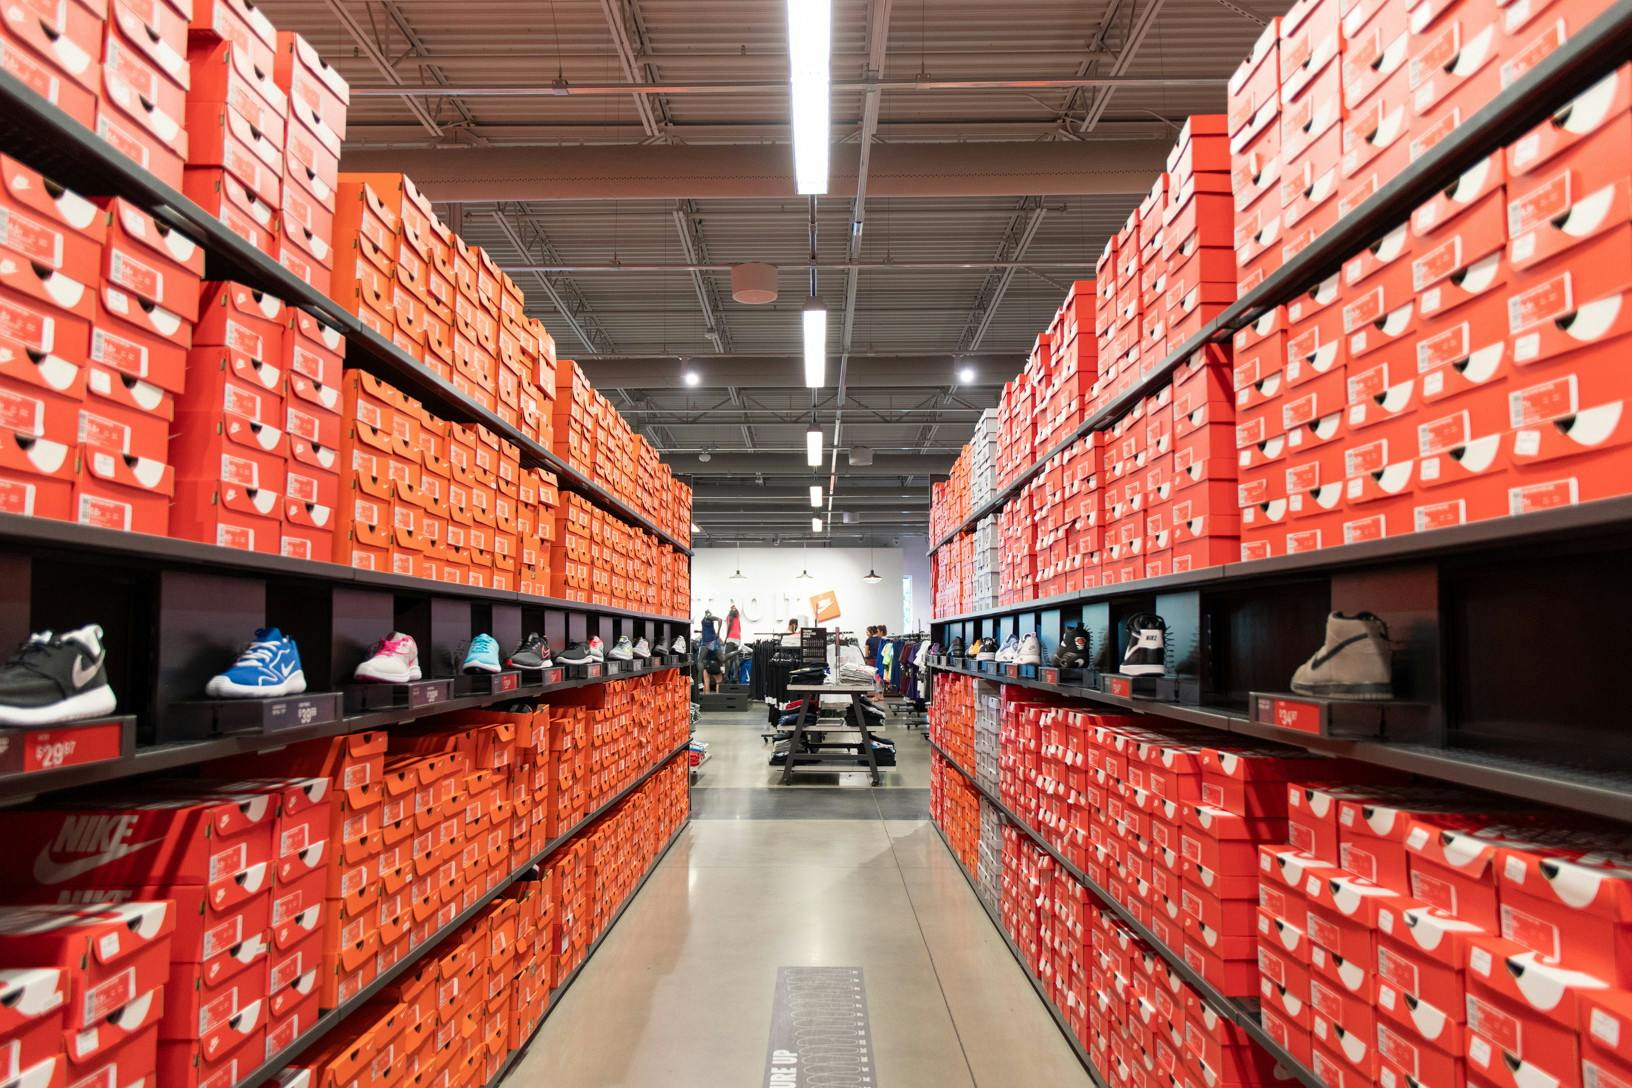 No.1 shoe in Nike”: Giannis Antetokounmpo expresses desire to trump Michael  Jordan through affordability